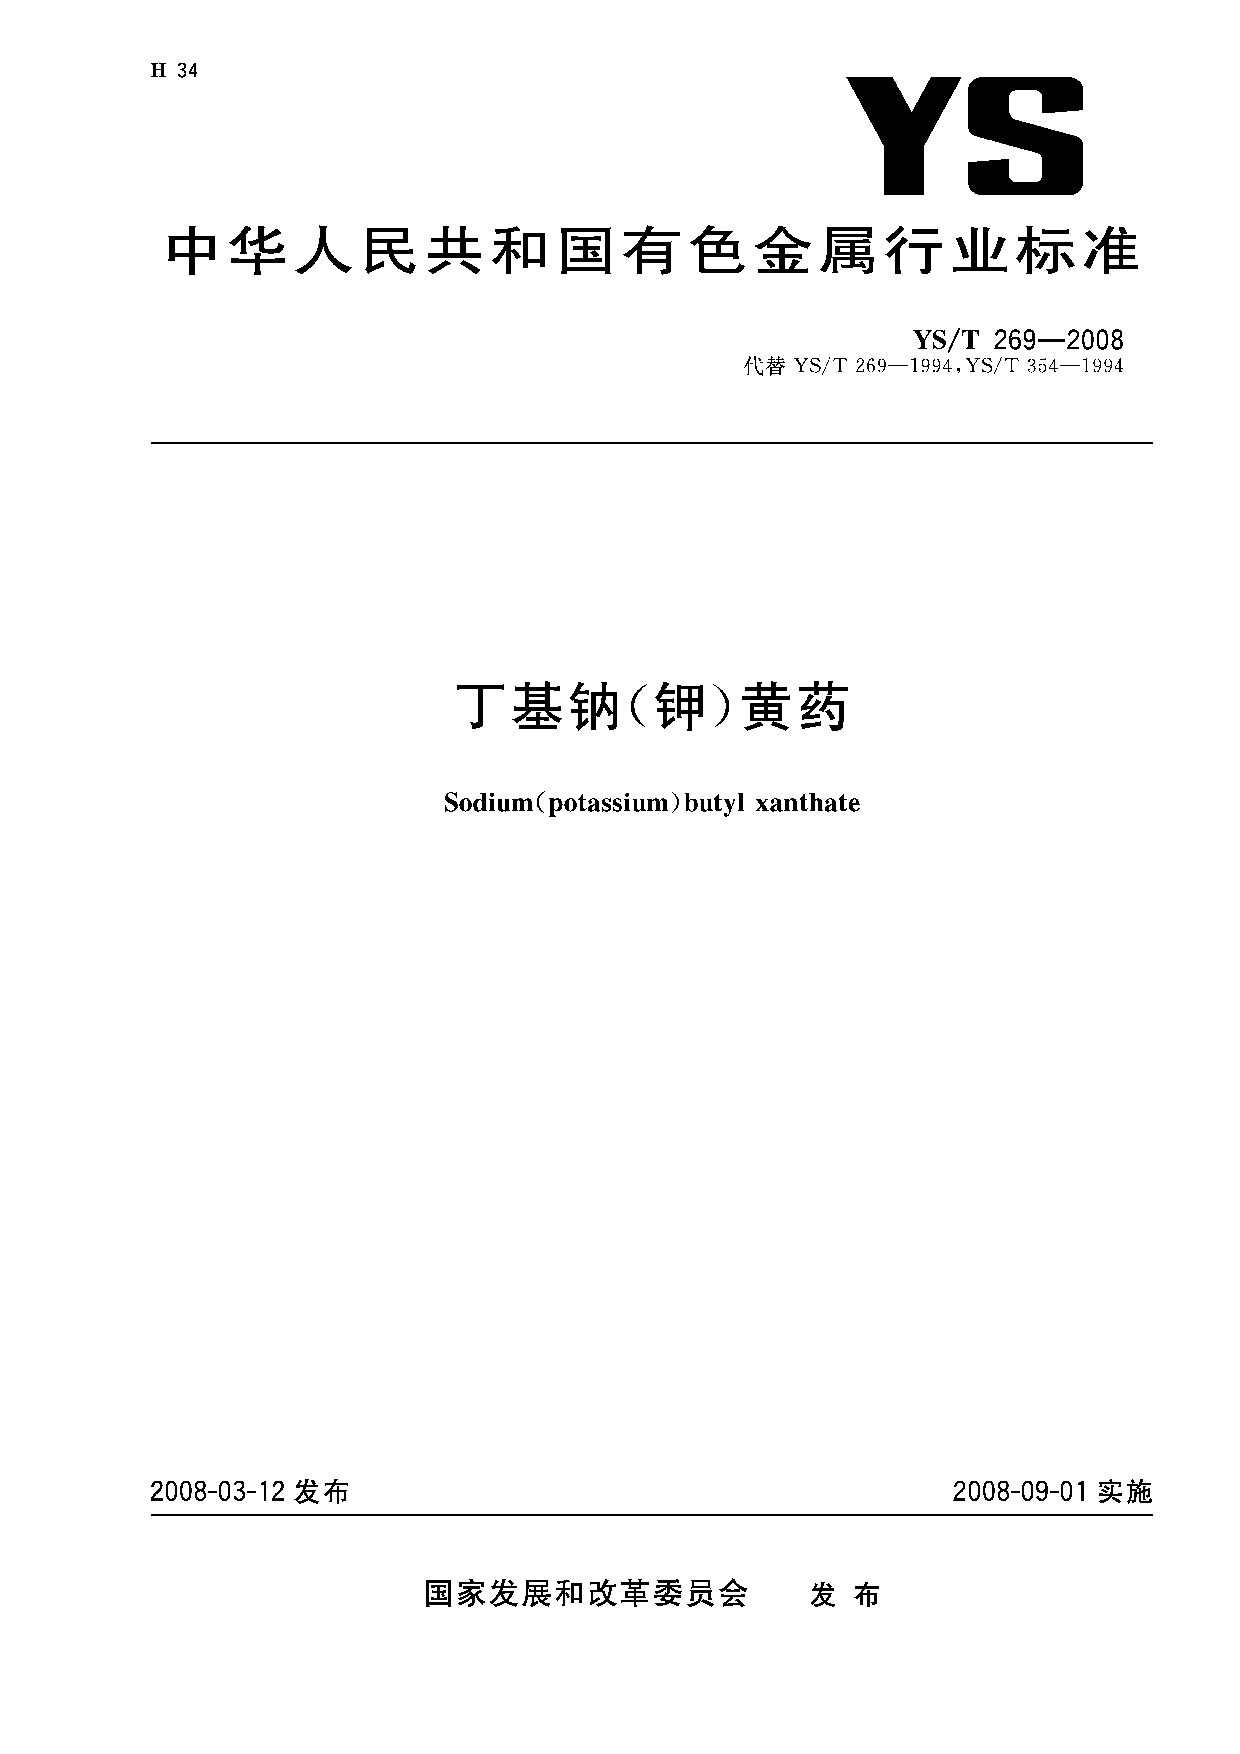 YS/T 269-2008封面图